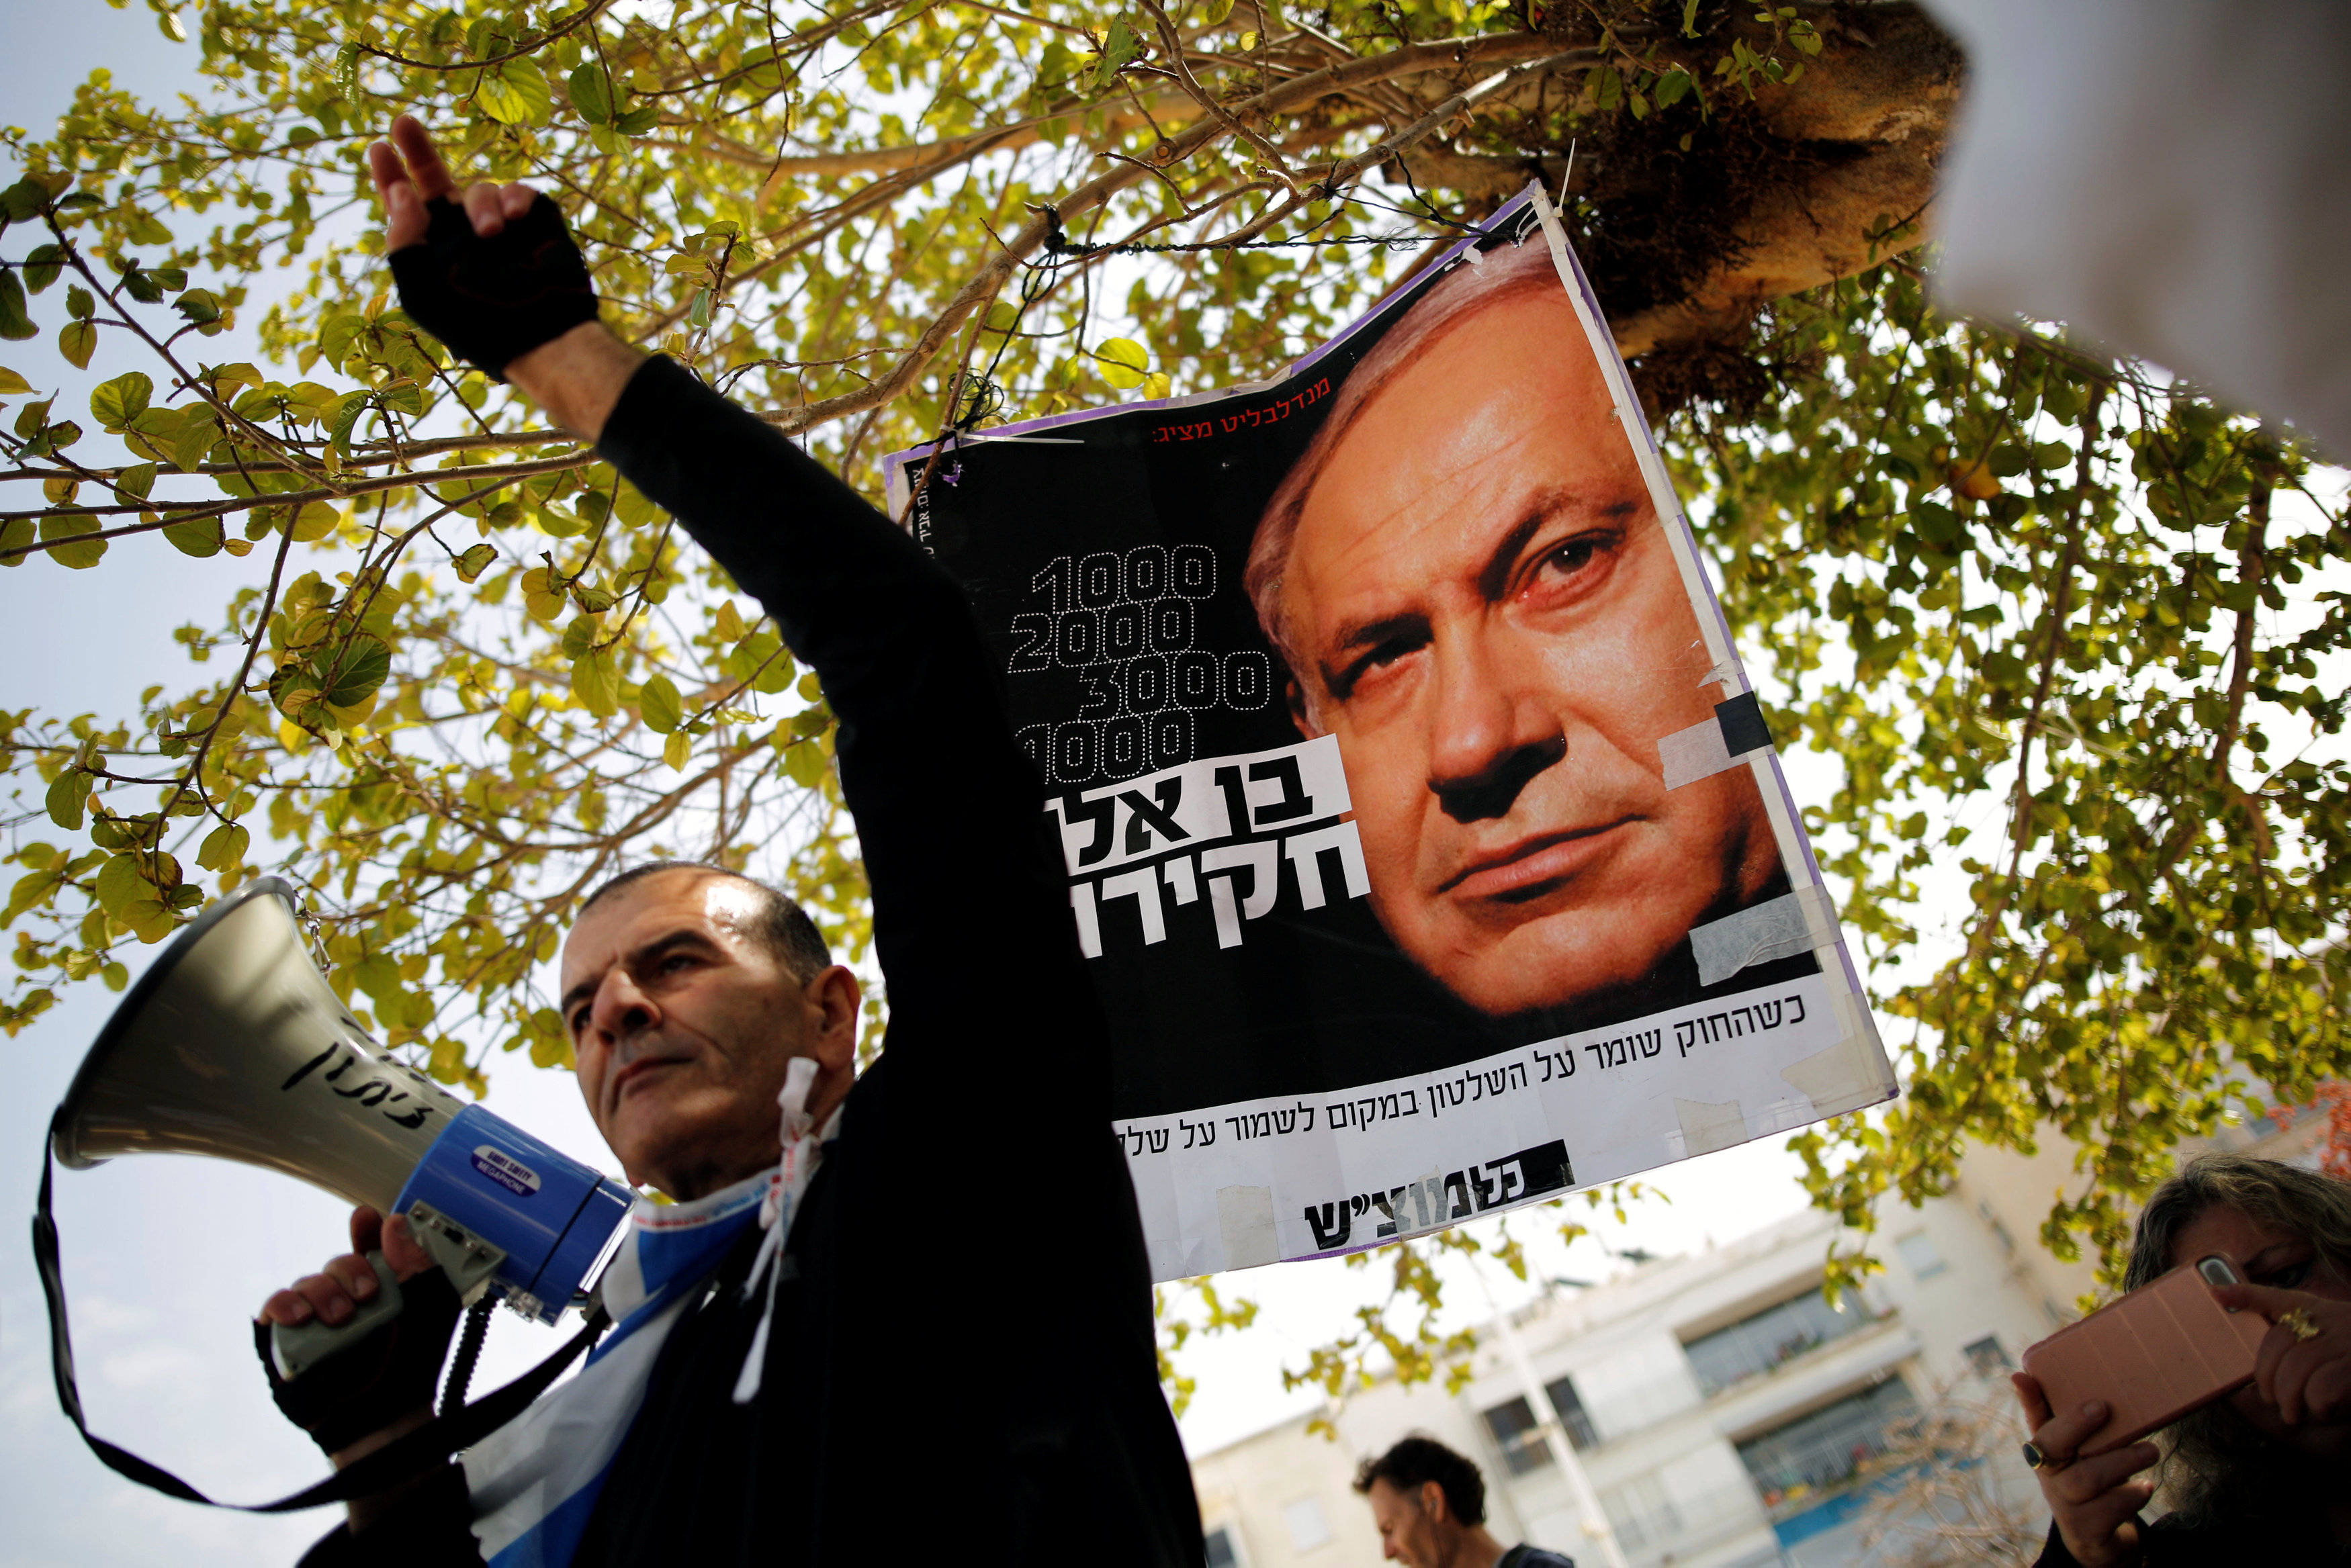 Miles de personas manifiestan en Tel Aviv pidiendo la renuncia de Netanyahu